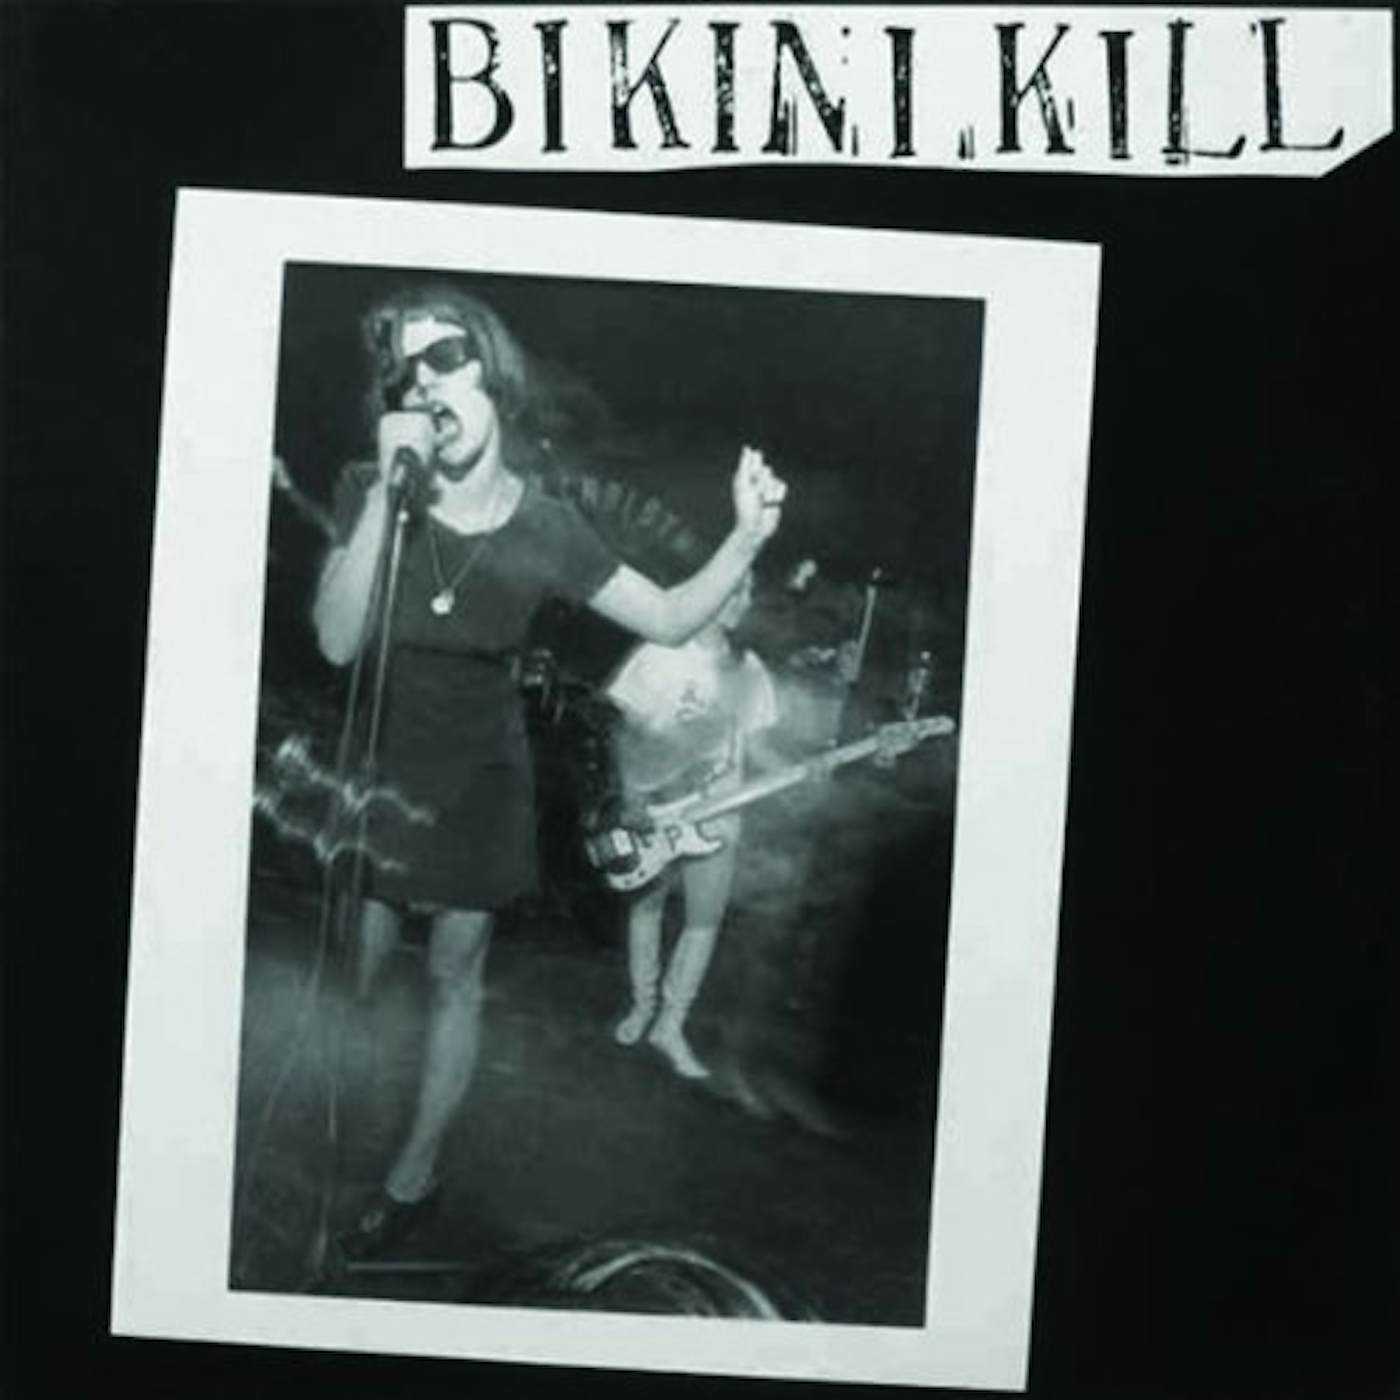 Bikini Kill Vinyl Record